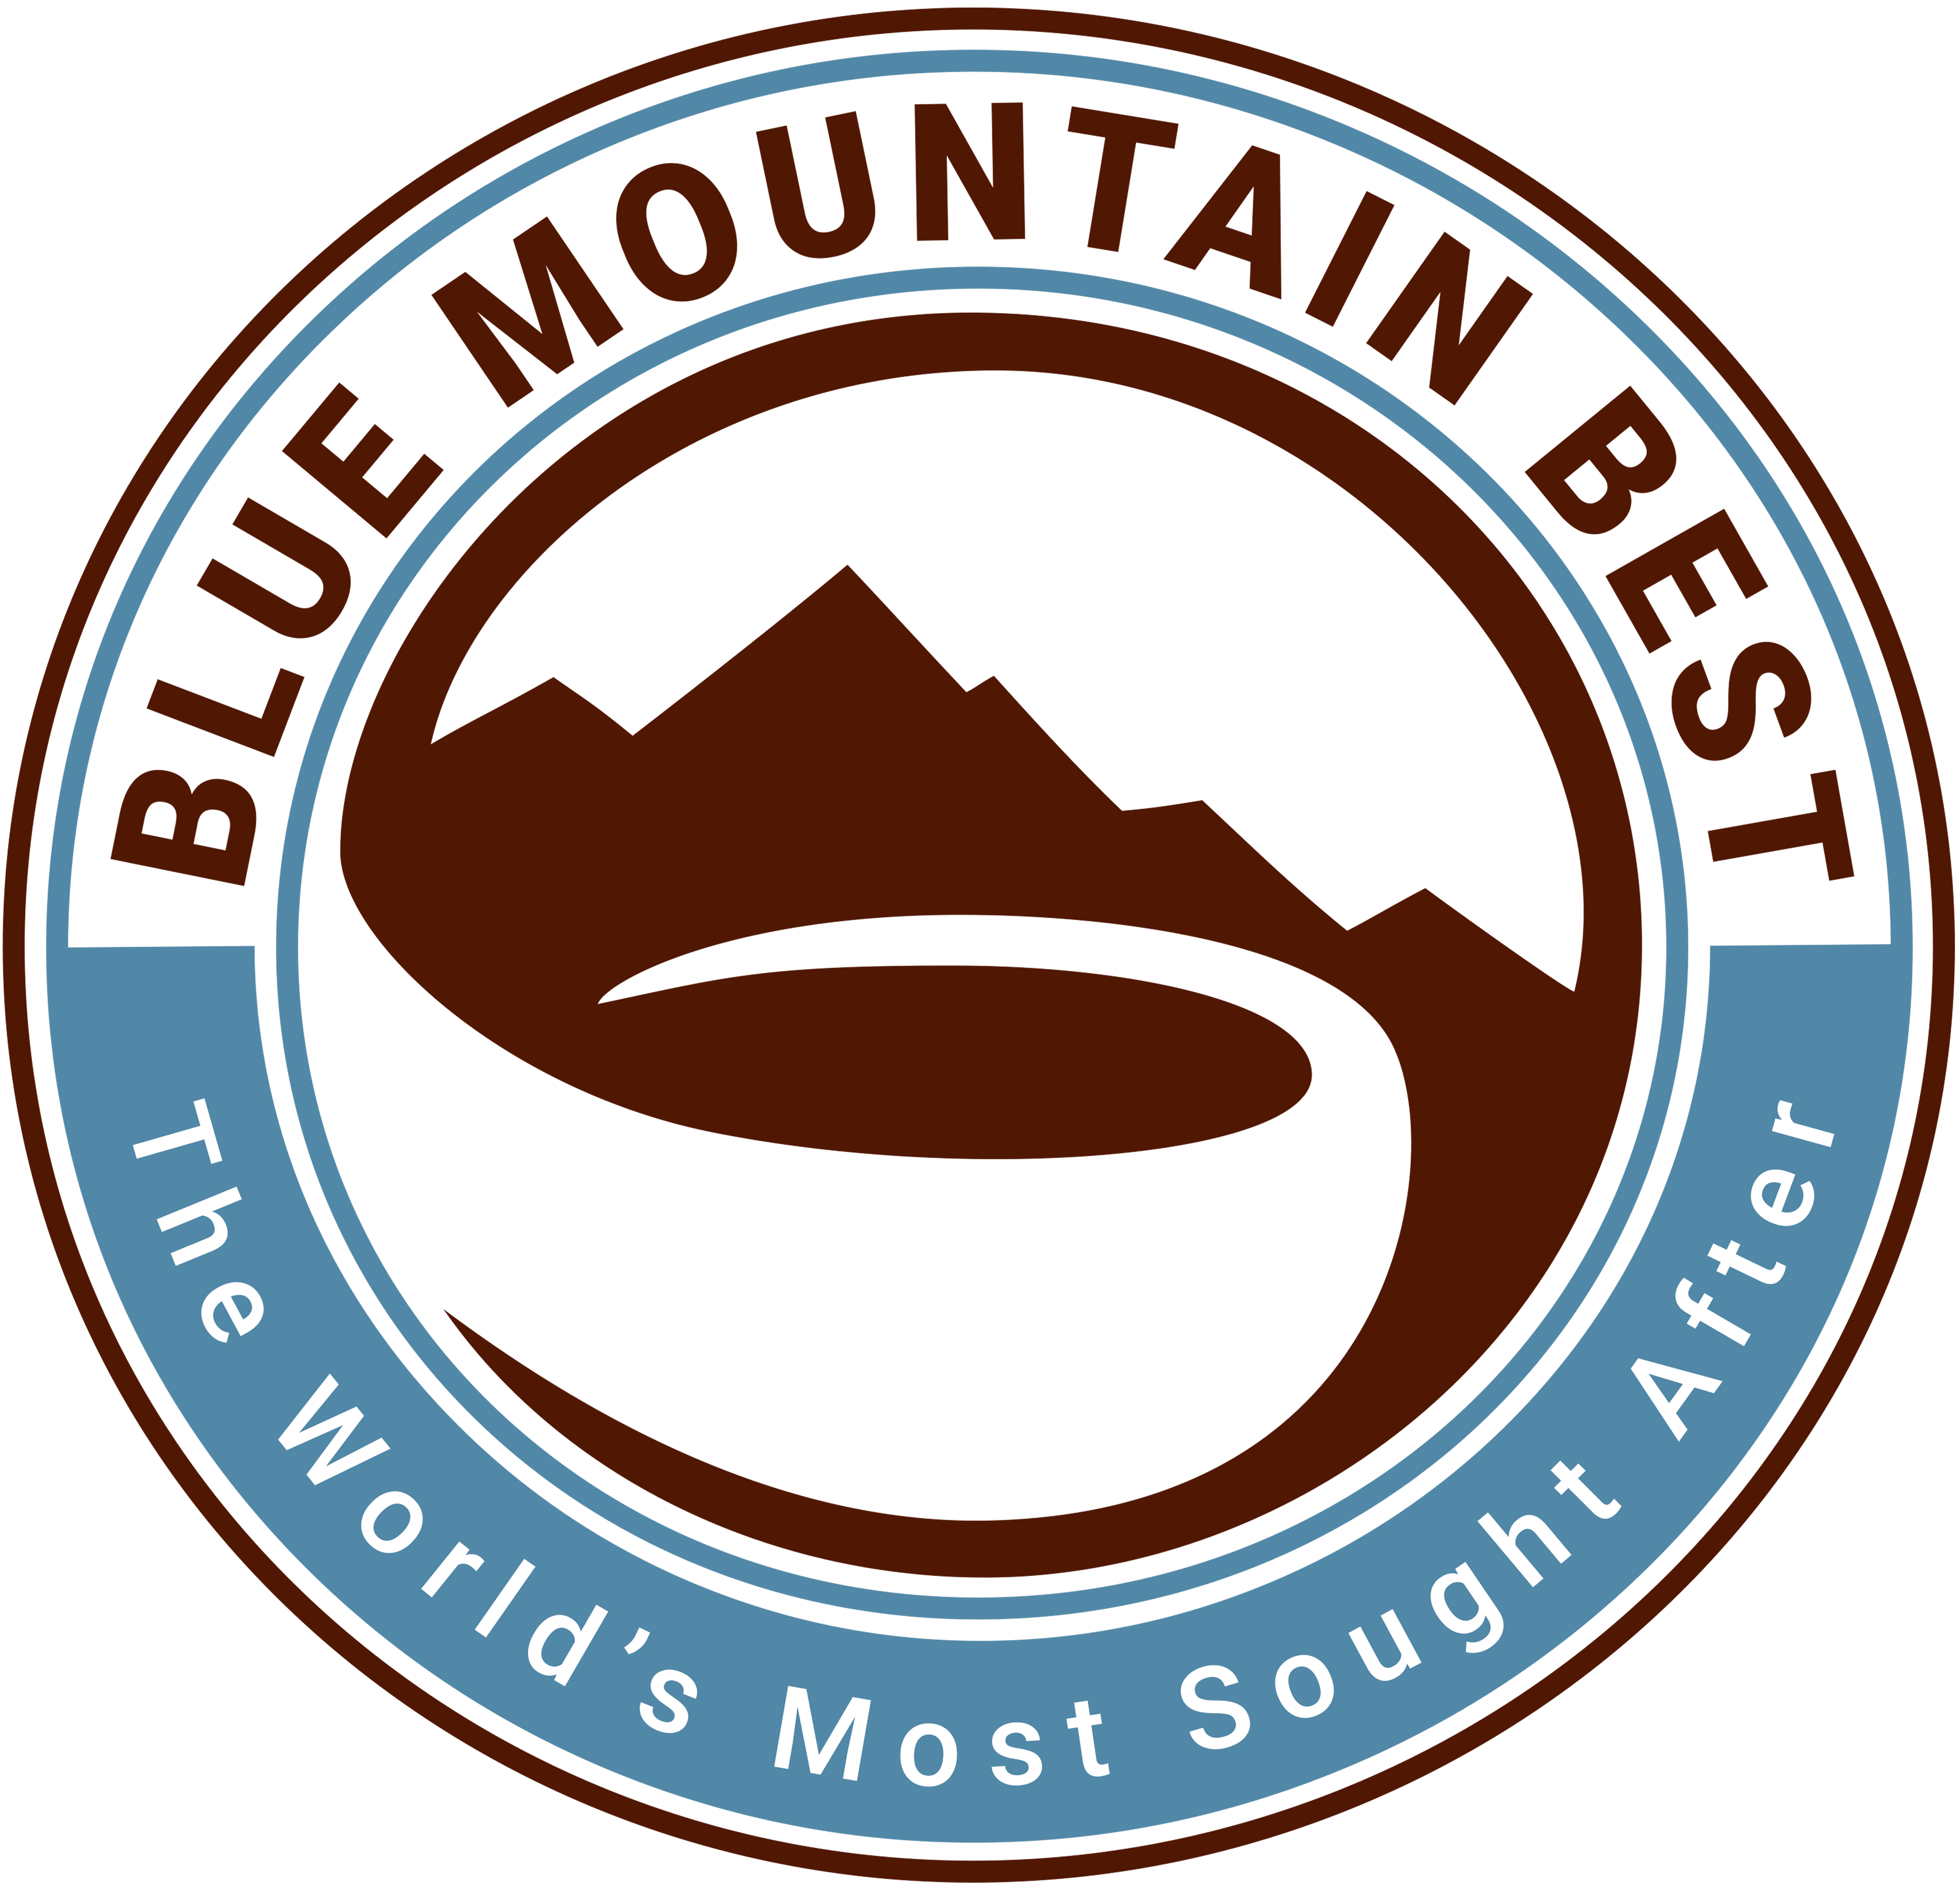 Blue Mountain Best